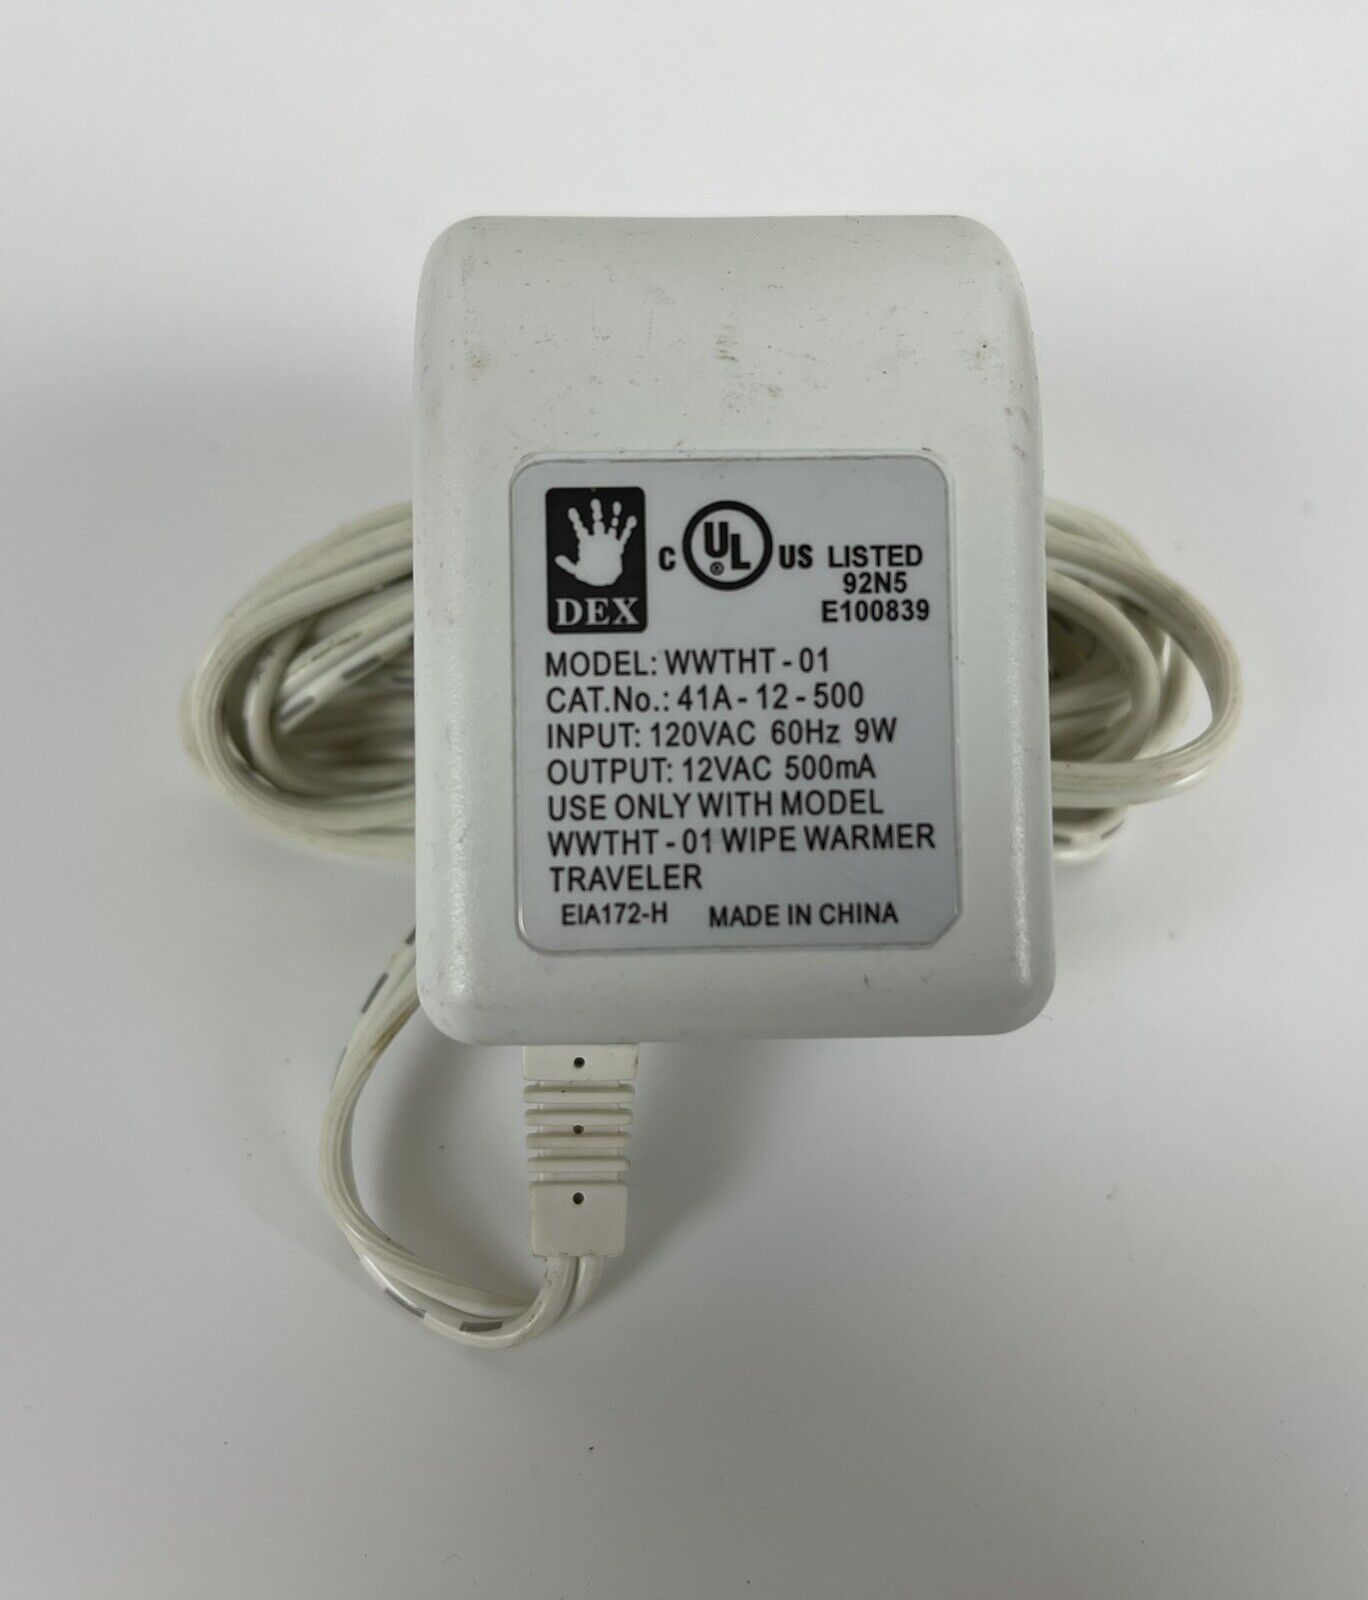 Original Power Supply AC Adapter for Dexbaby Travel Wipe Warmer WWTHT-01 12VAC Brand: Dex Type: AC/DC Adapter Connec